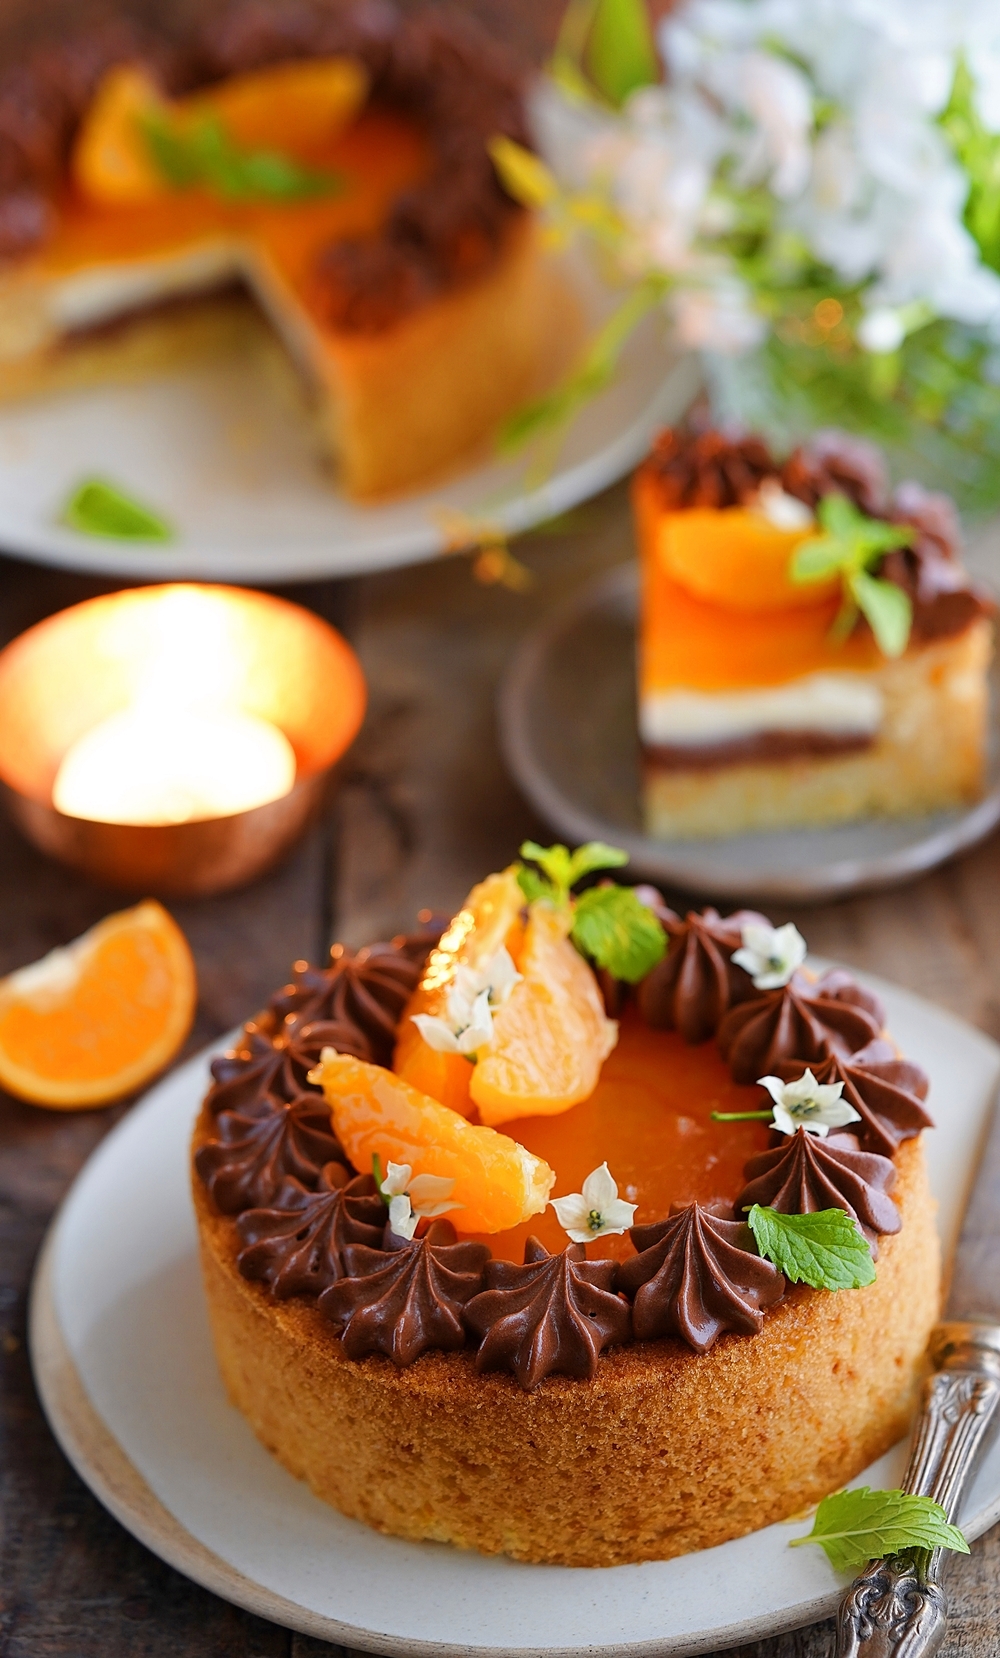 Blackberry & orange cake recipe | Good Food